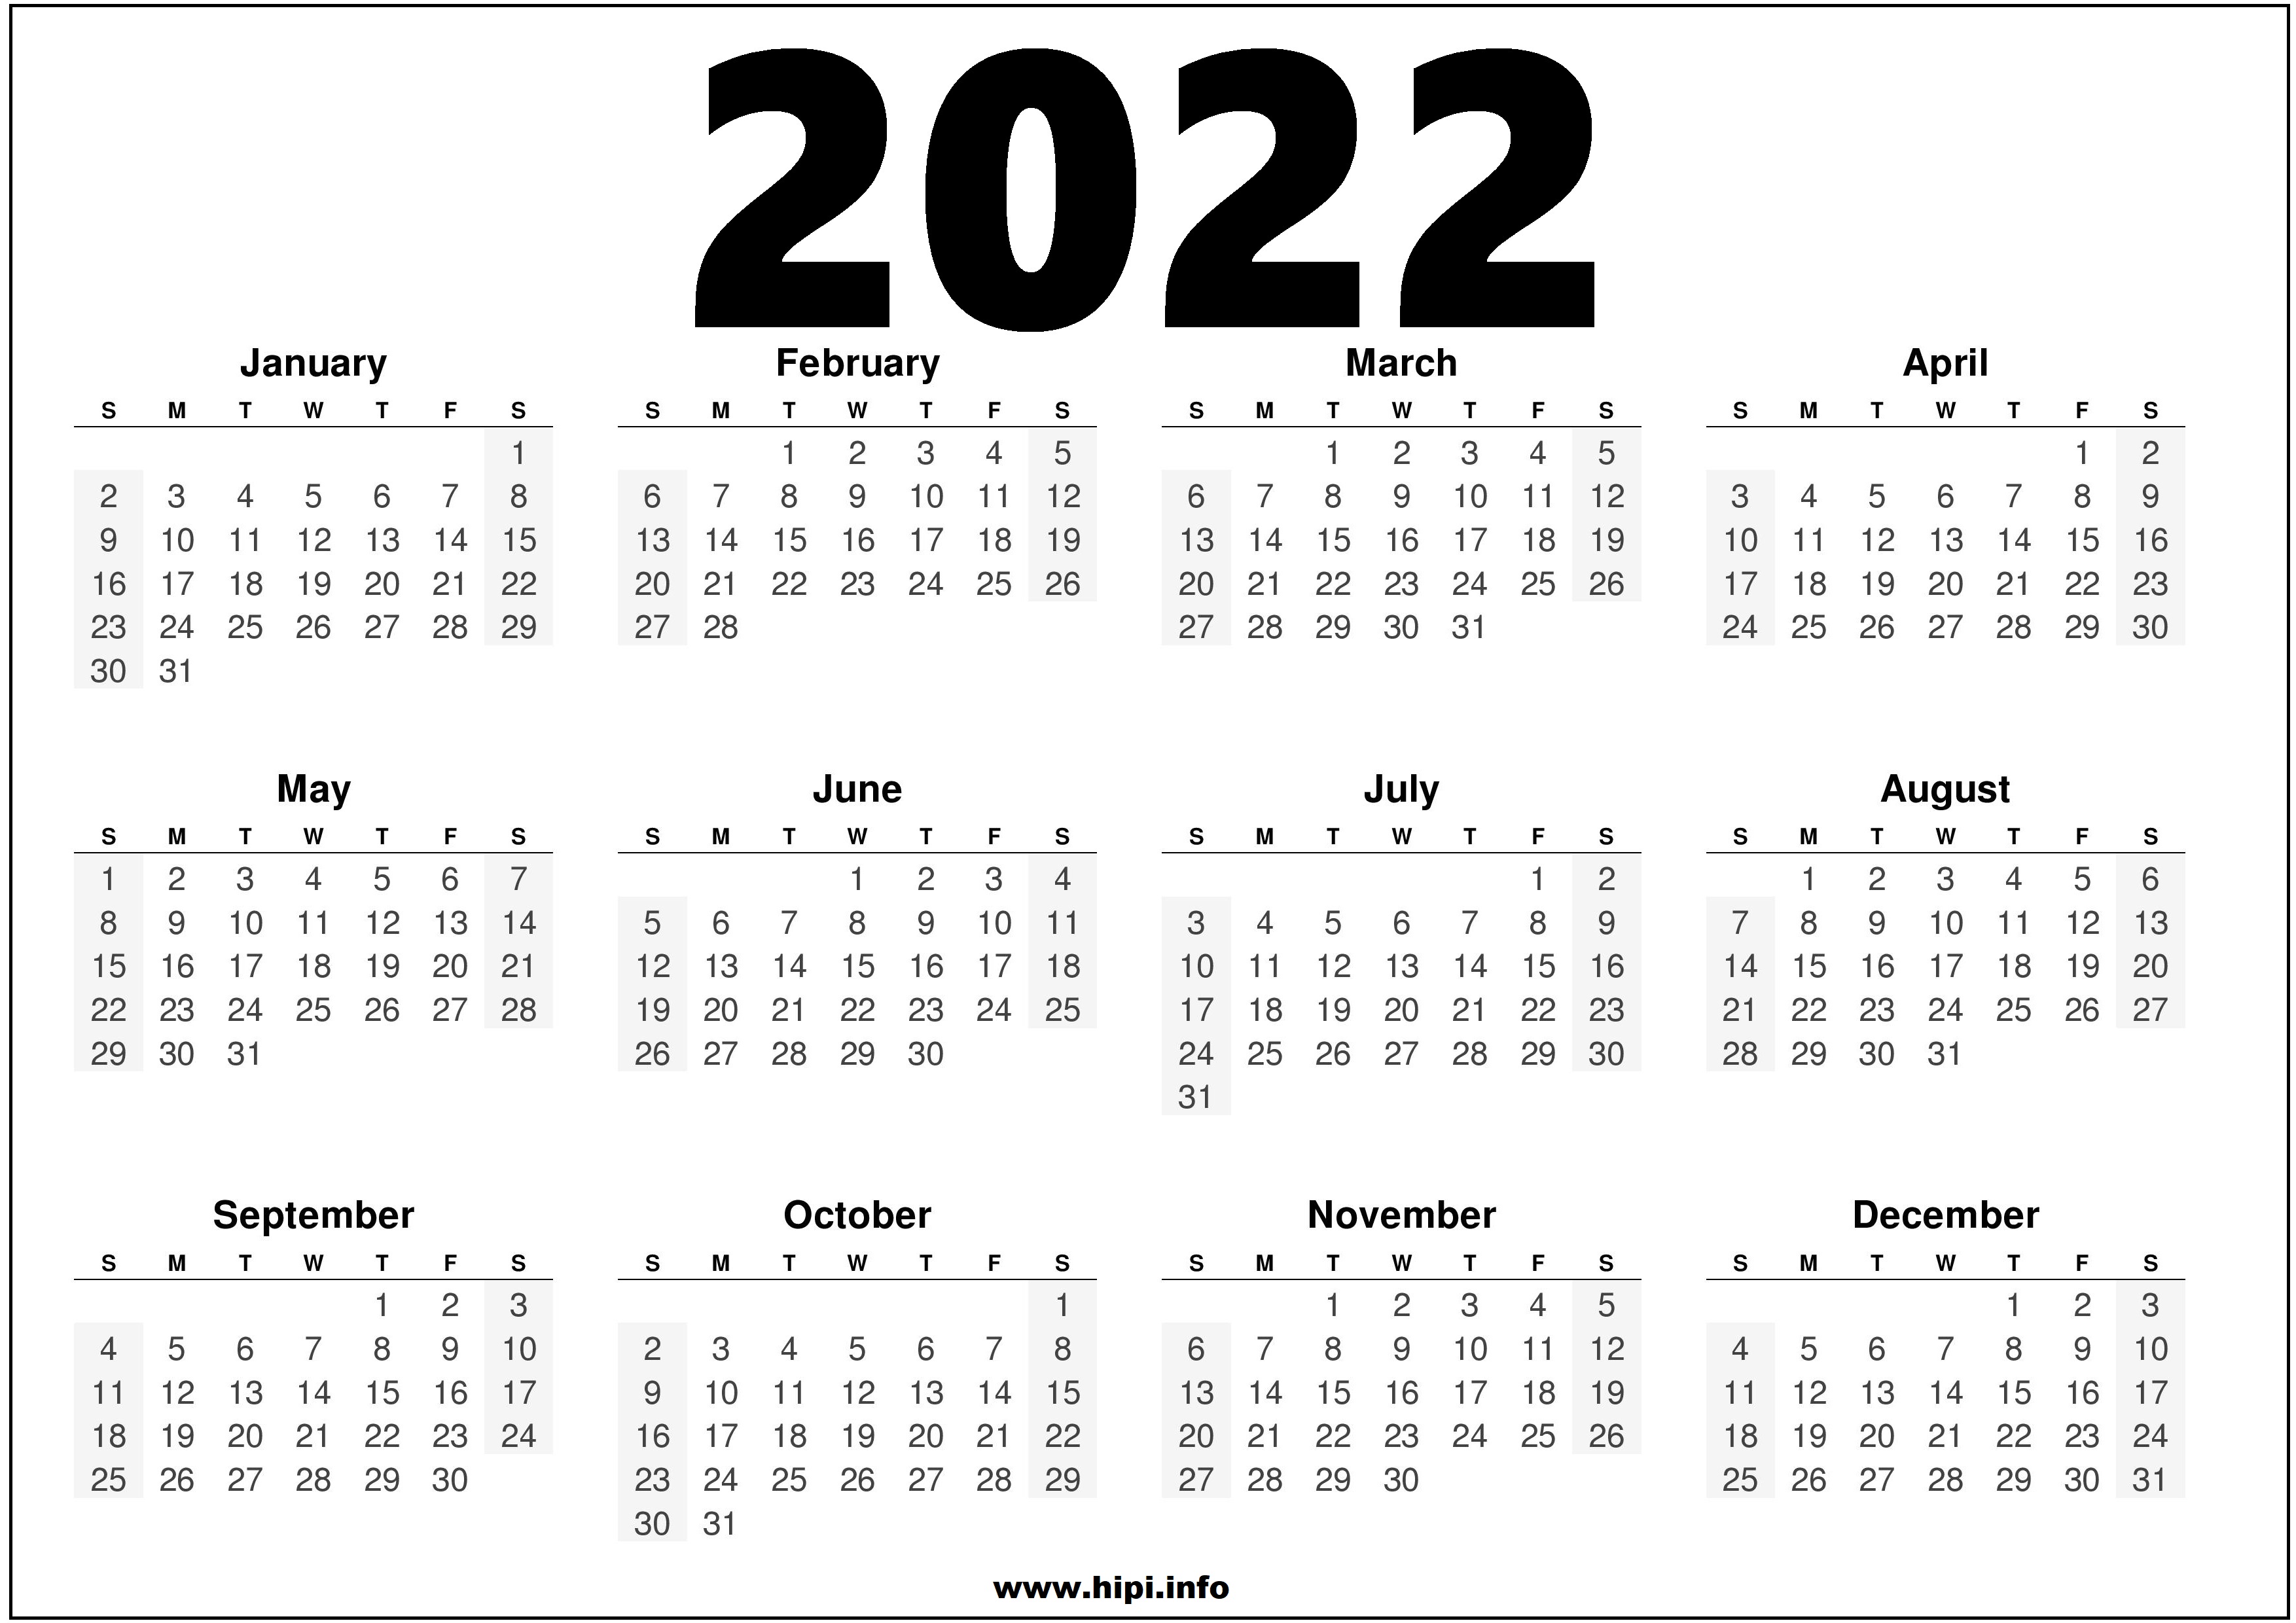 Download 2022 Calendar 2022 Printable Calendar Us Free Download - Hipi.info | Calendars Printable  Free